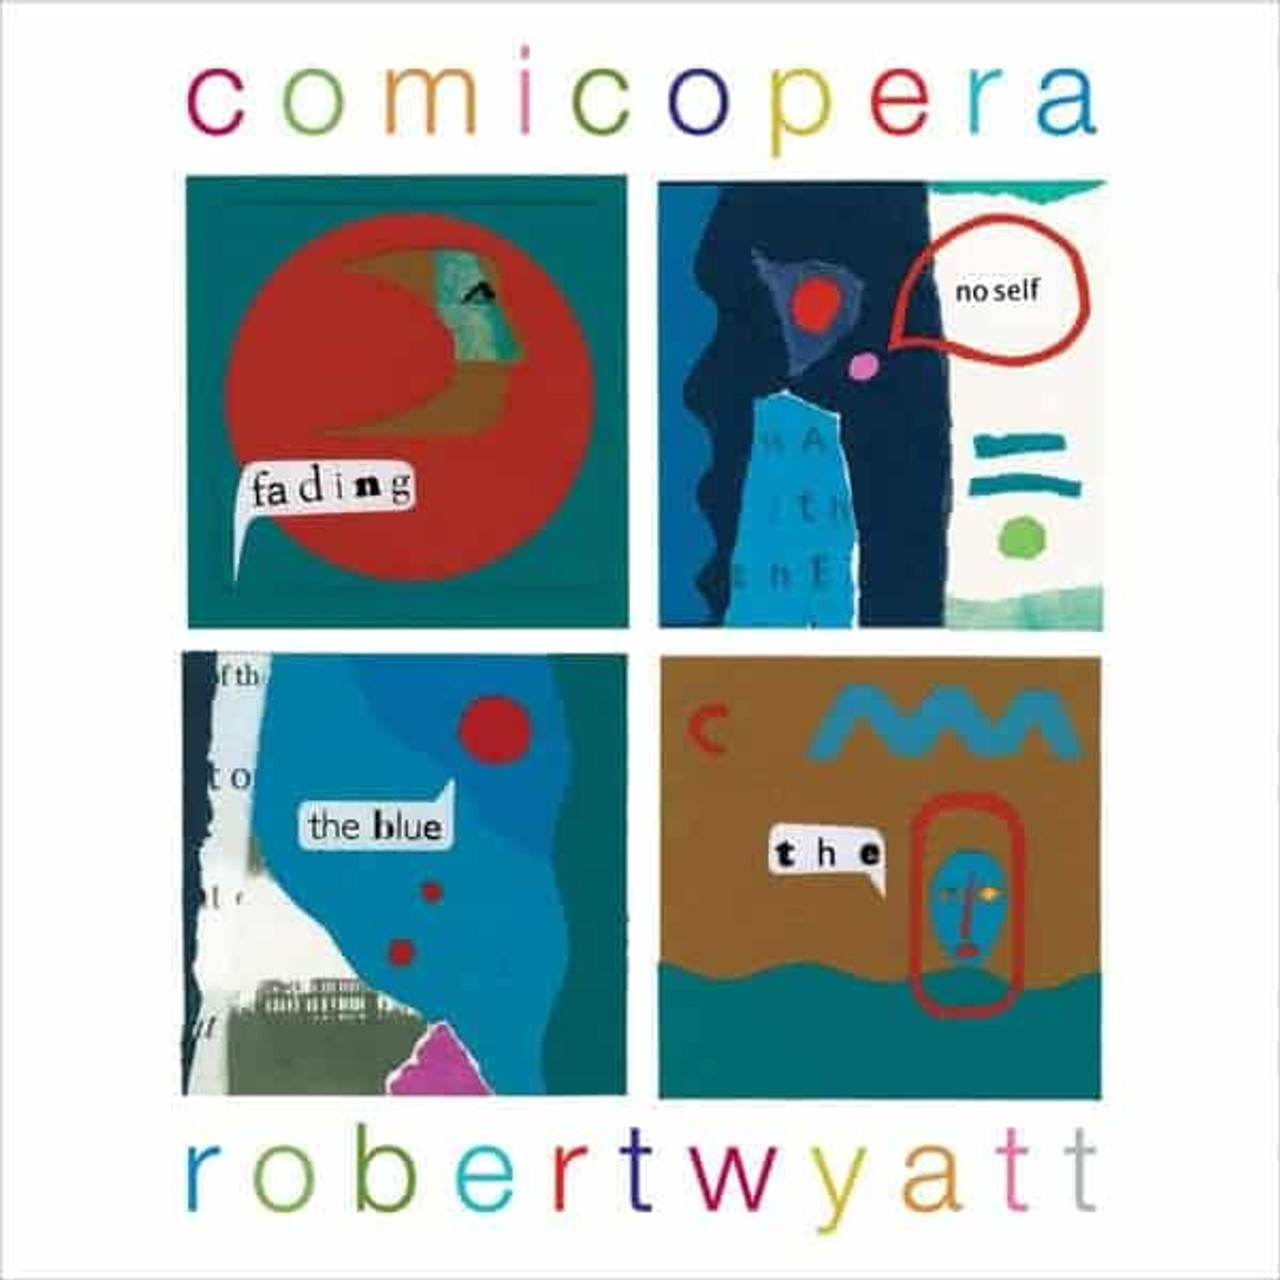 Robert Wyatt - Comicopera on 2 disc 180g heavyweight vinyl